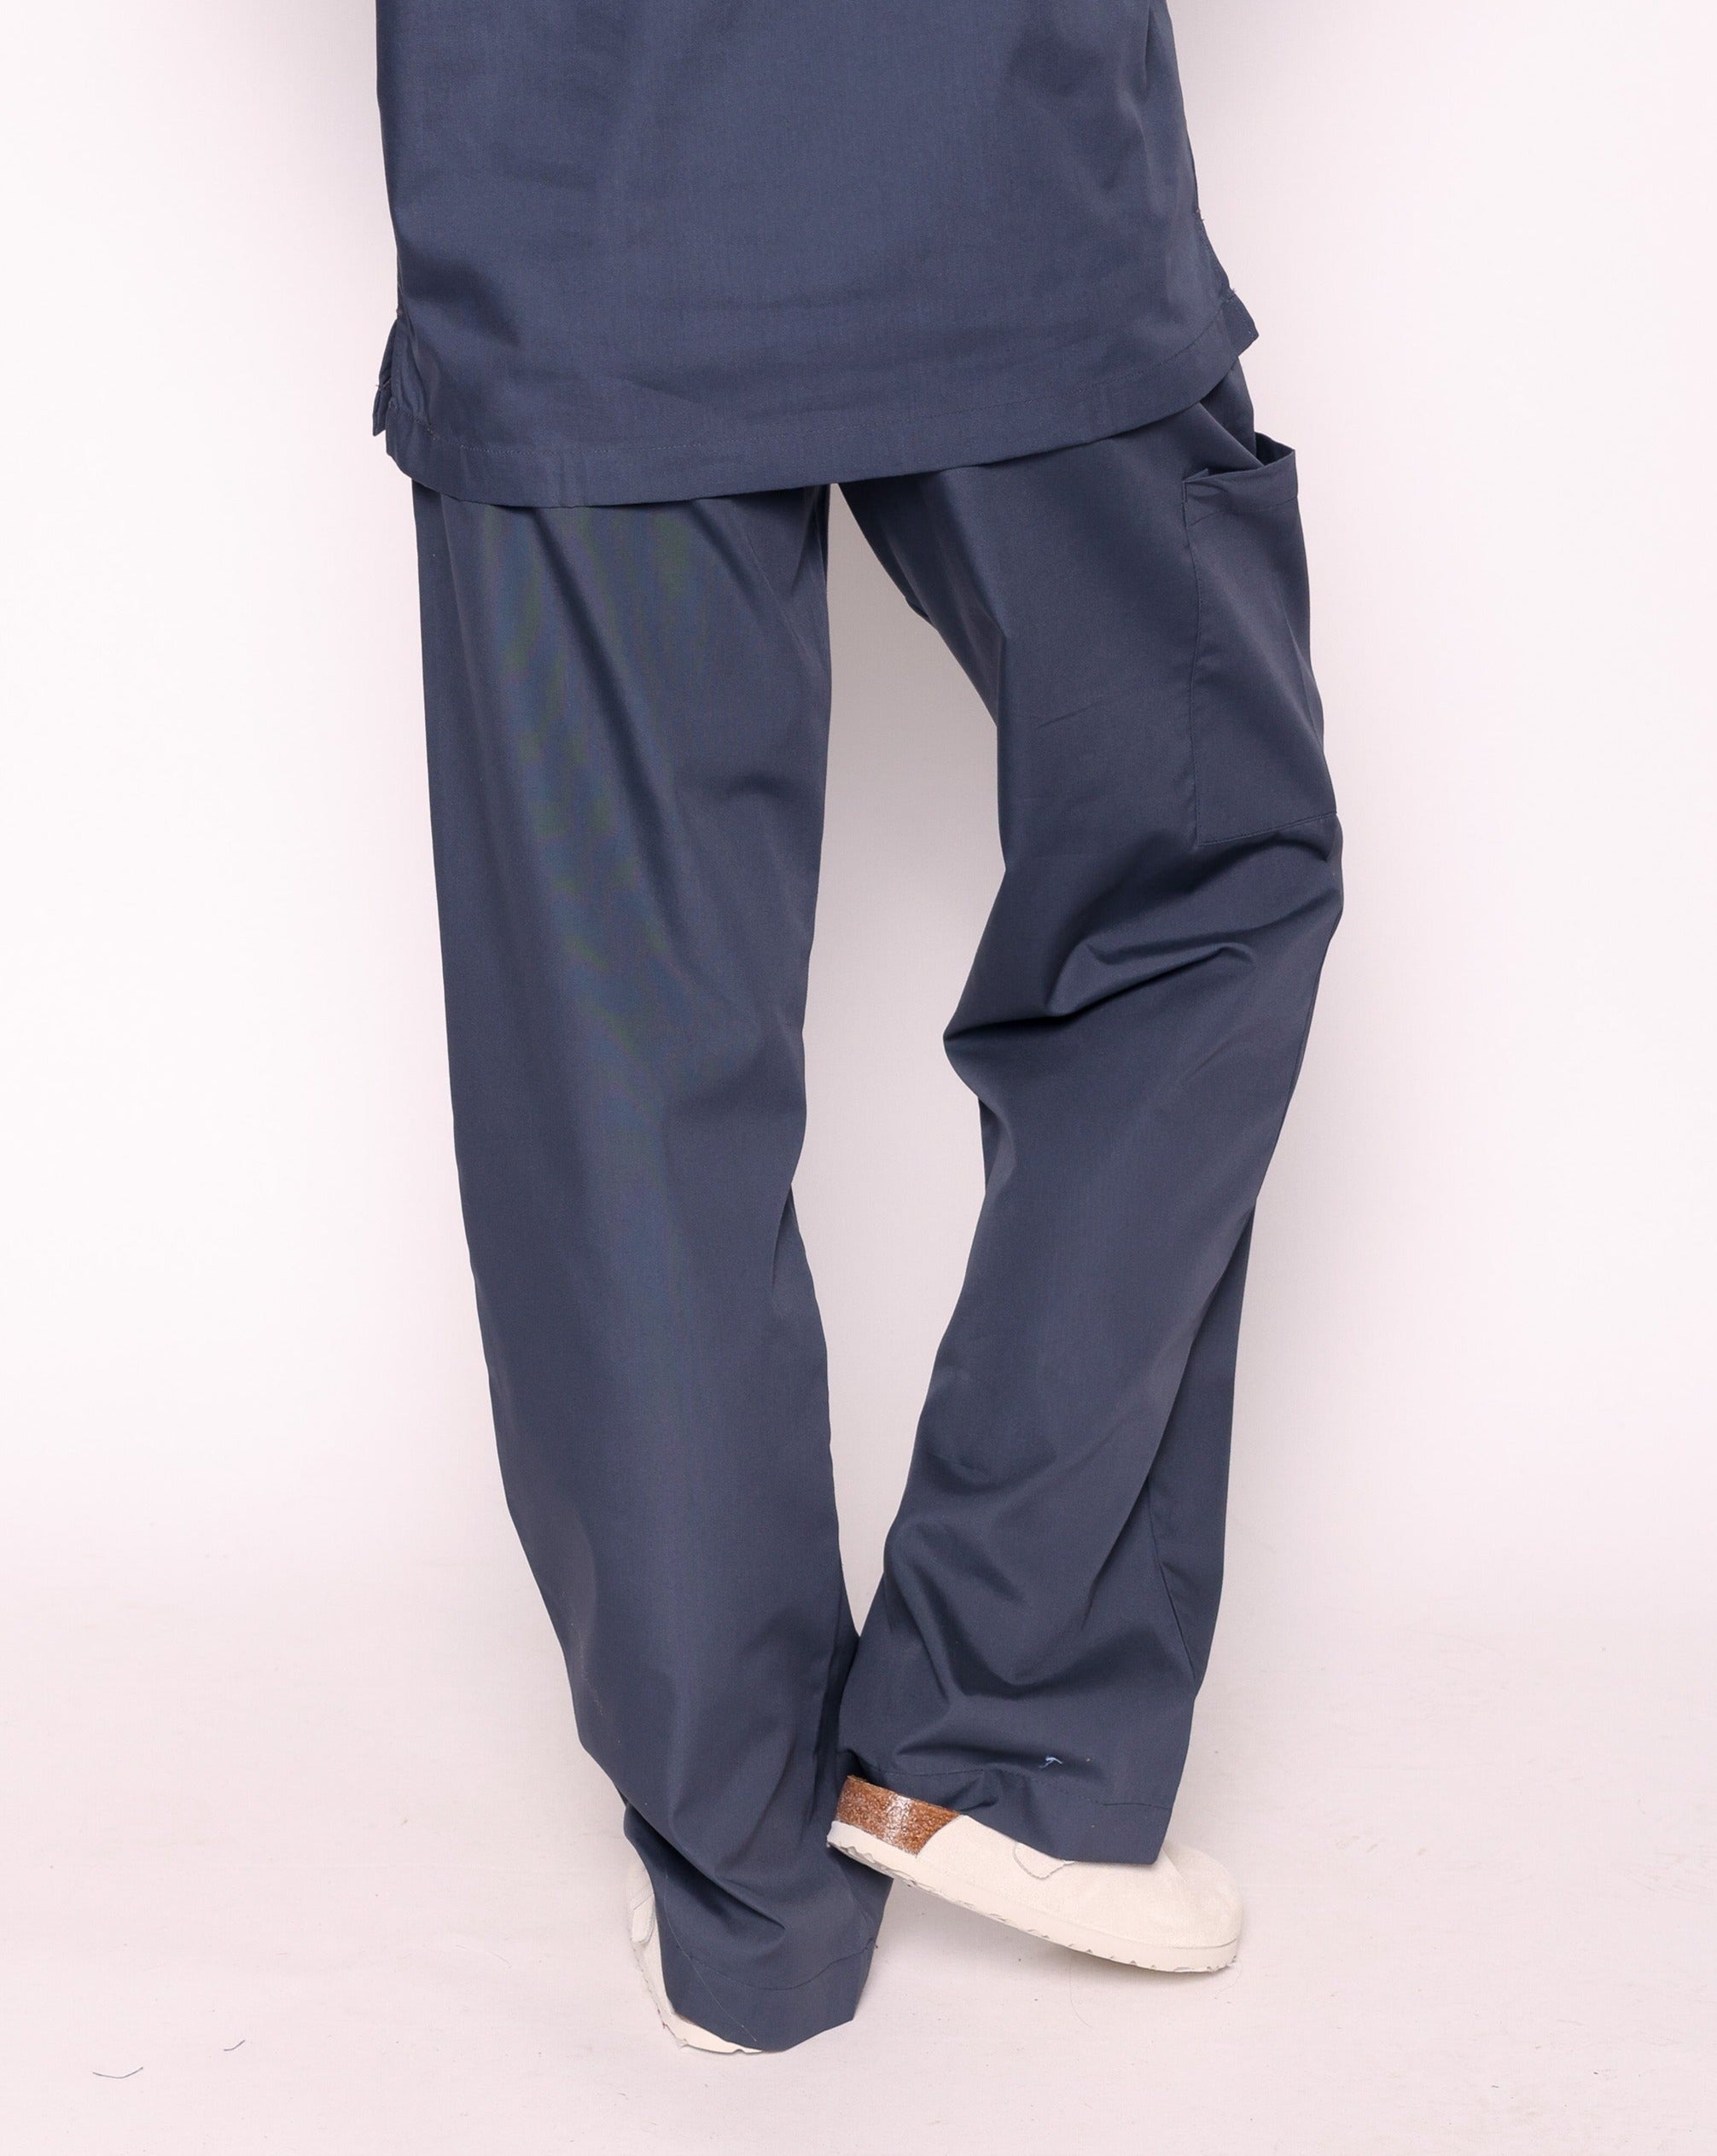 Newbury Unisex Drawstring Scrub Trousers - Charcoal Grey